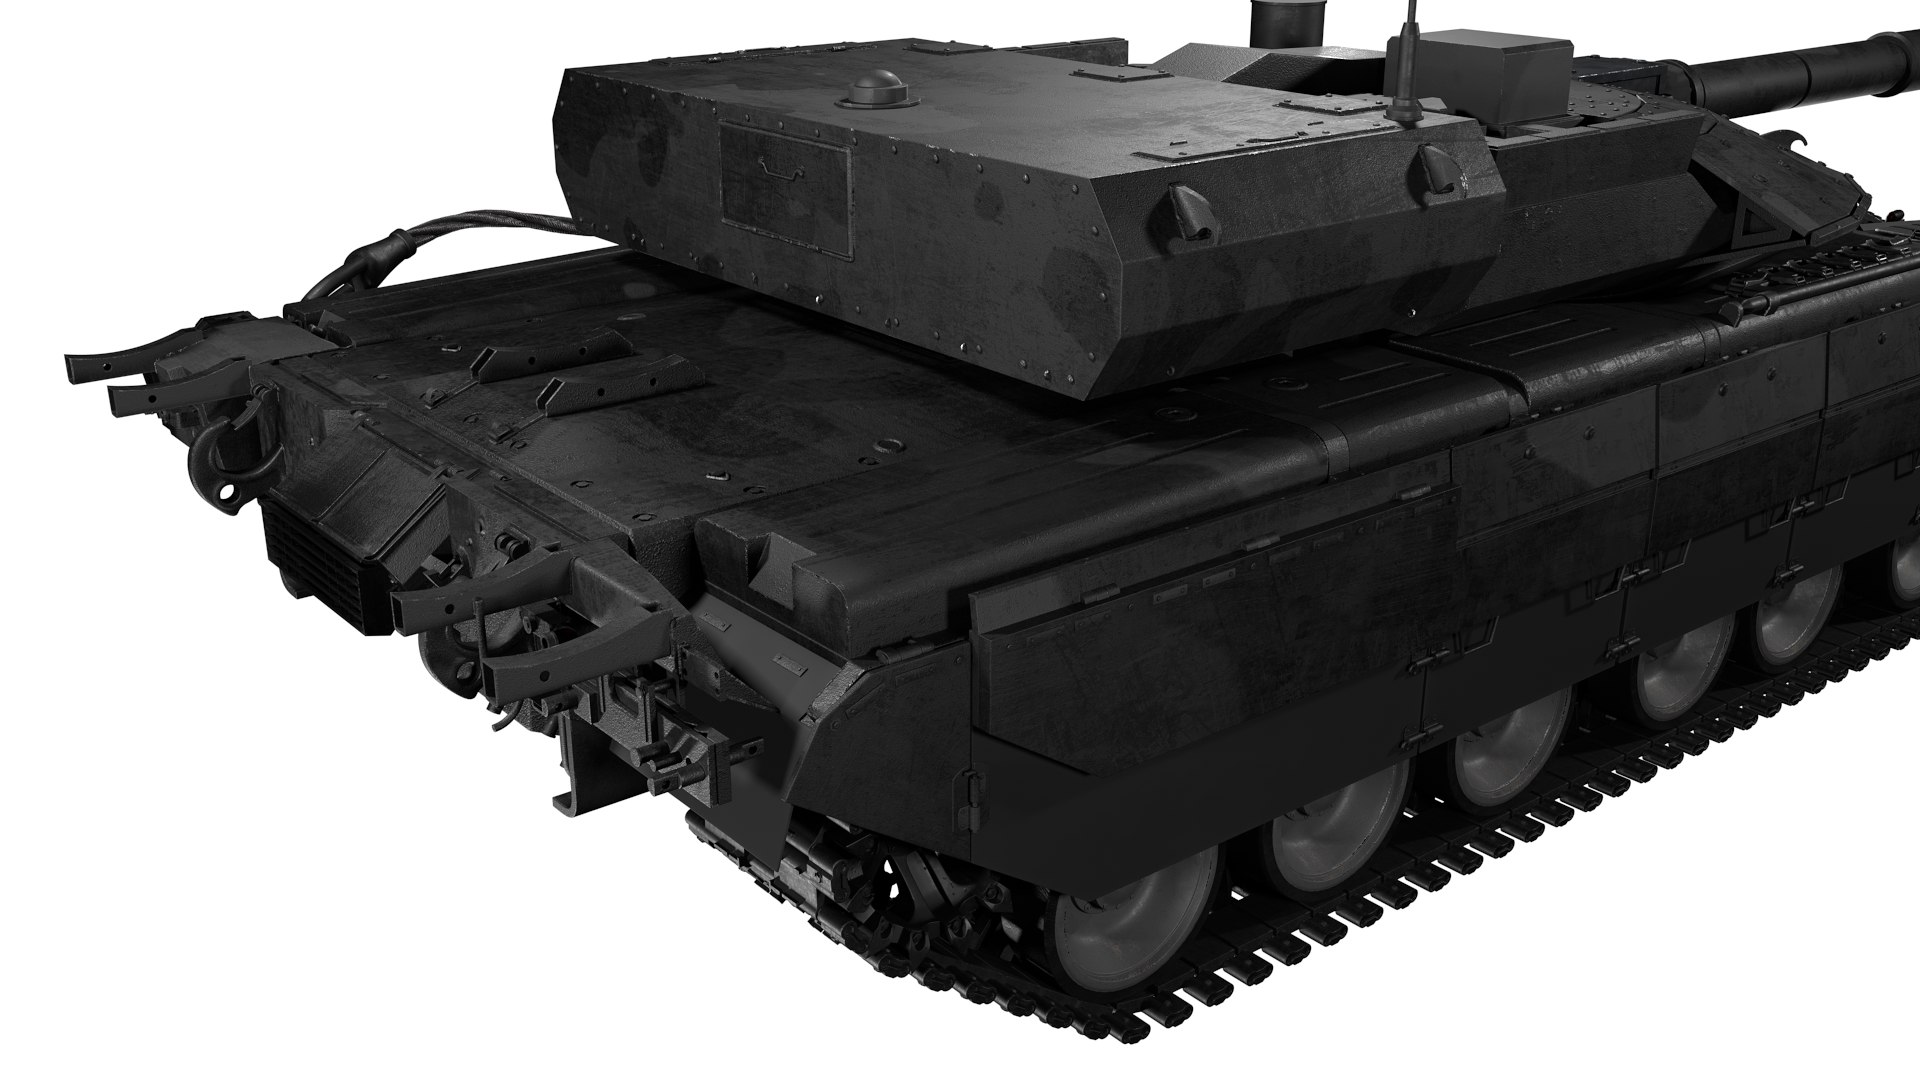 BLACK EAGLE Main Battle Tank